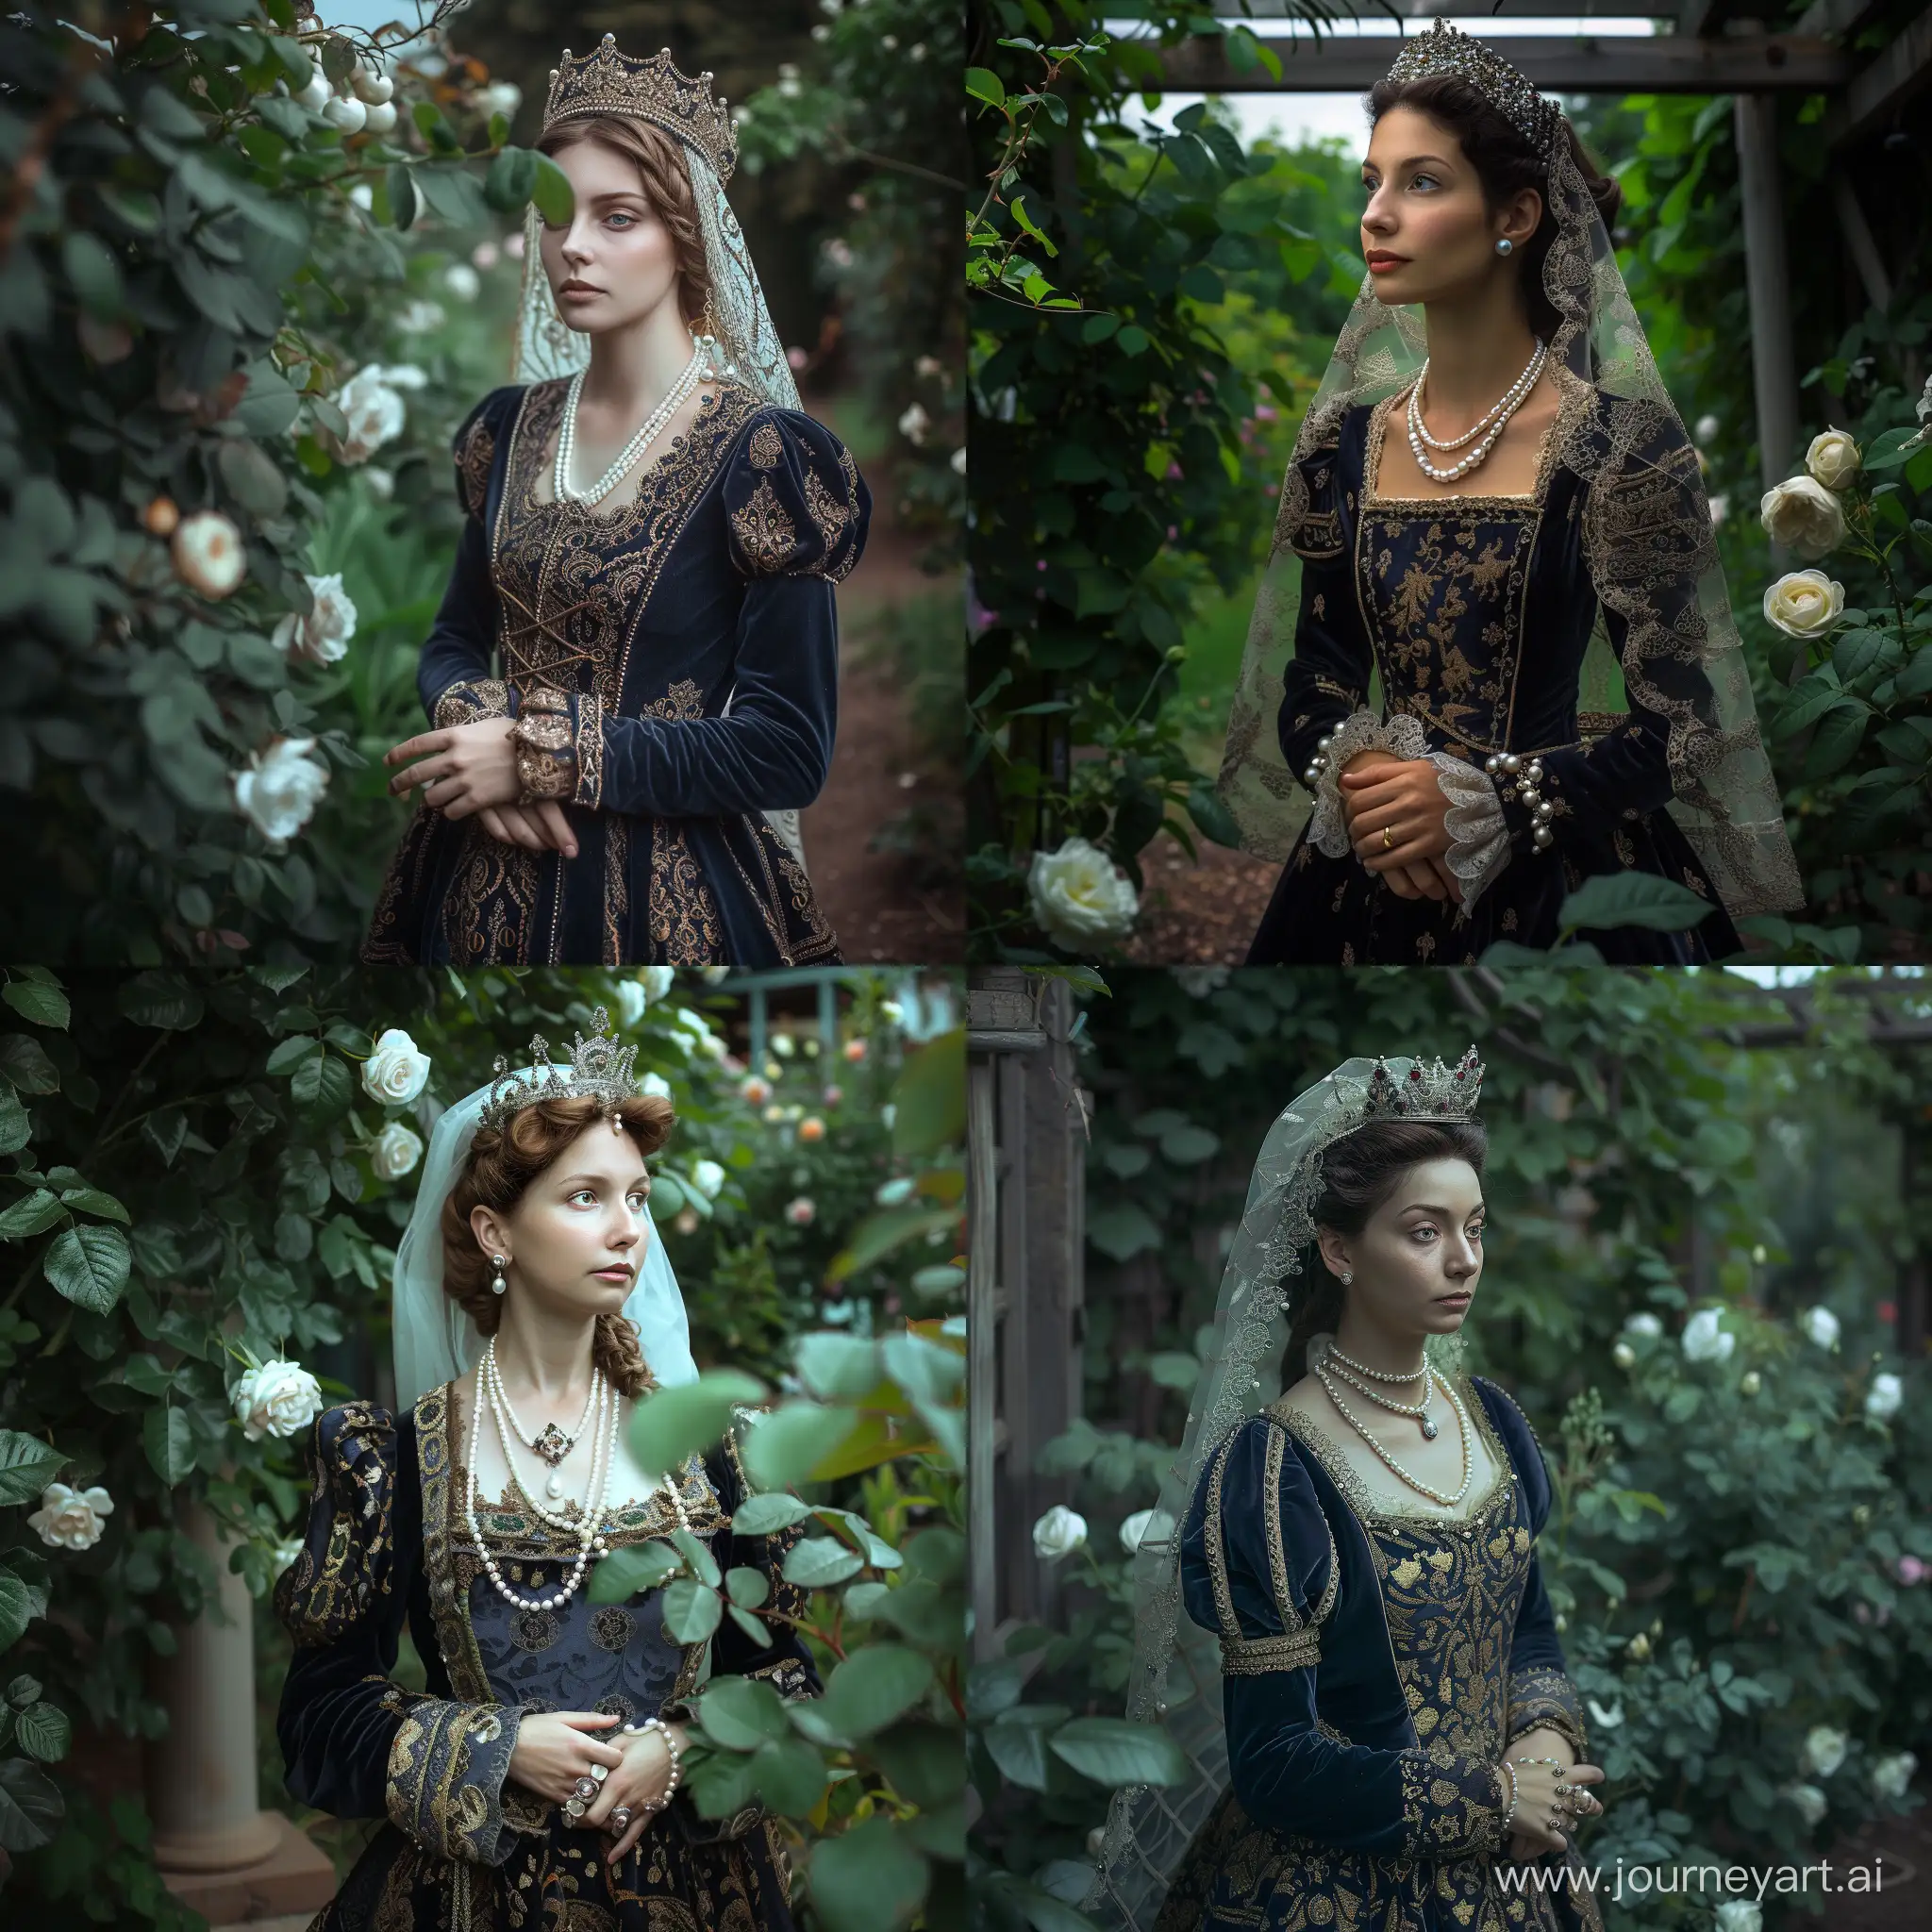 Elegant-Renaissance-Noblewoman-Amid-Lush-Garden-with-Pearl-Jewelry